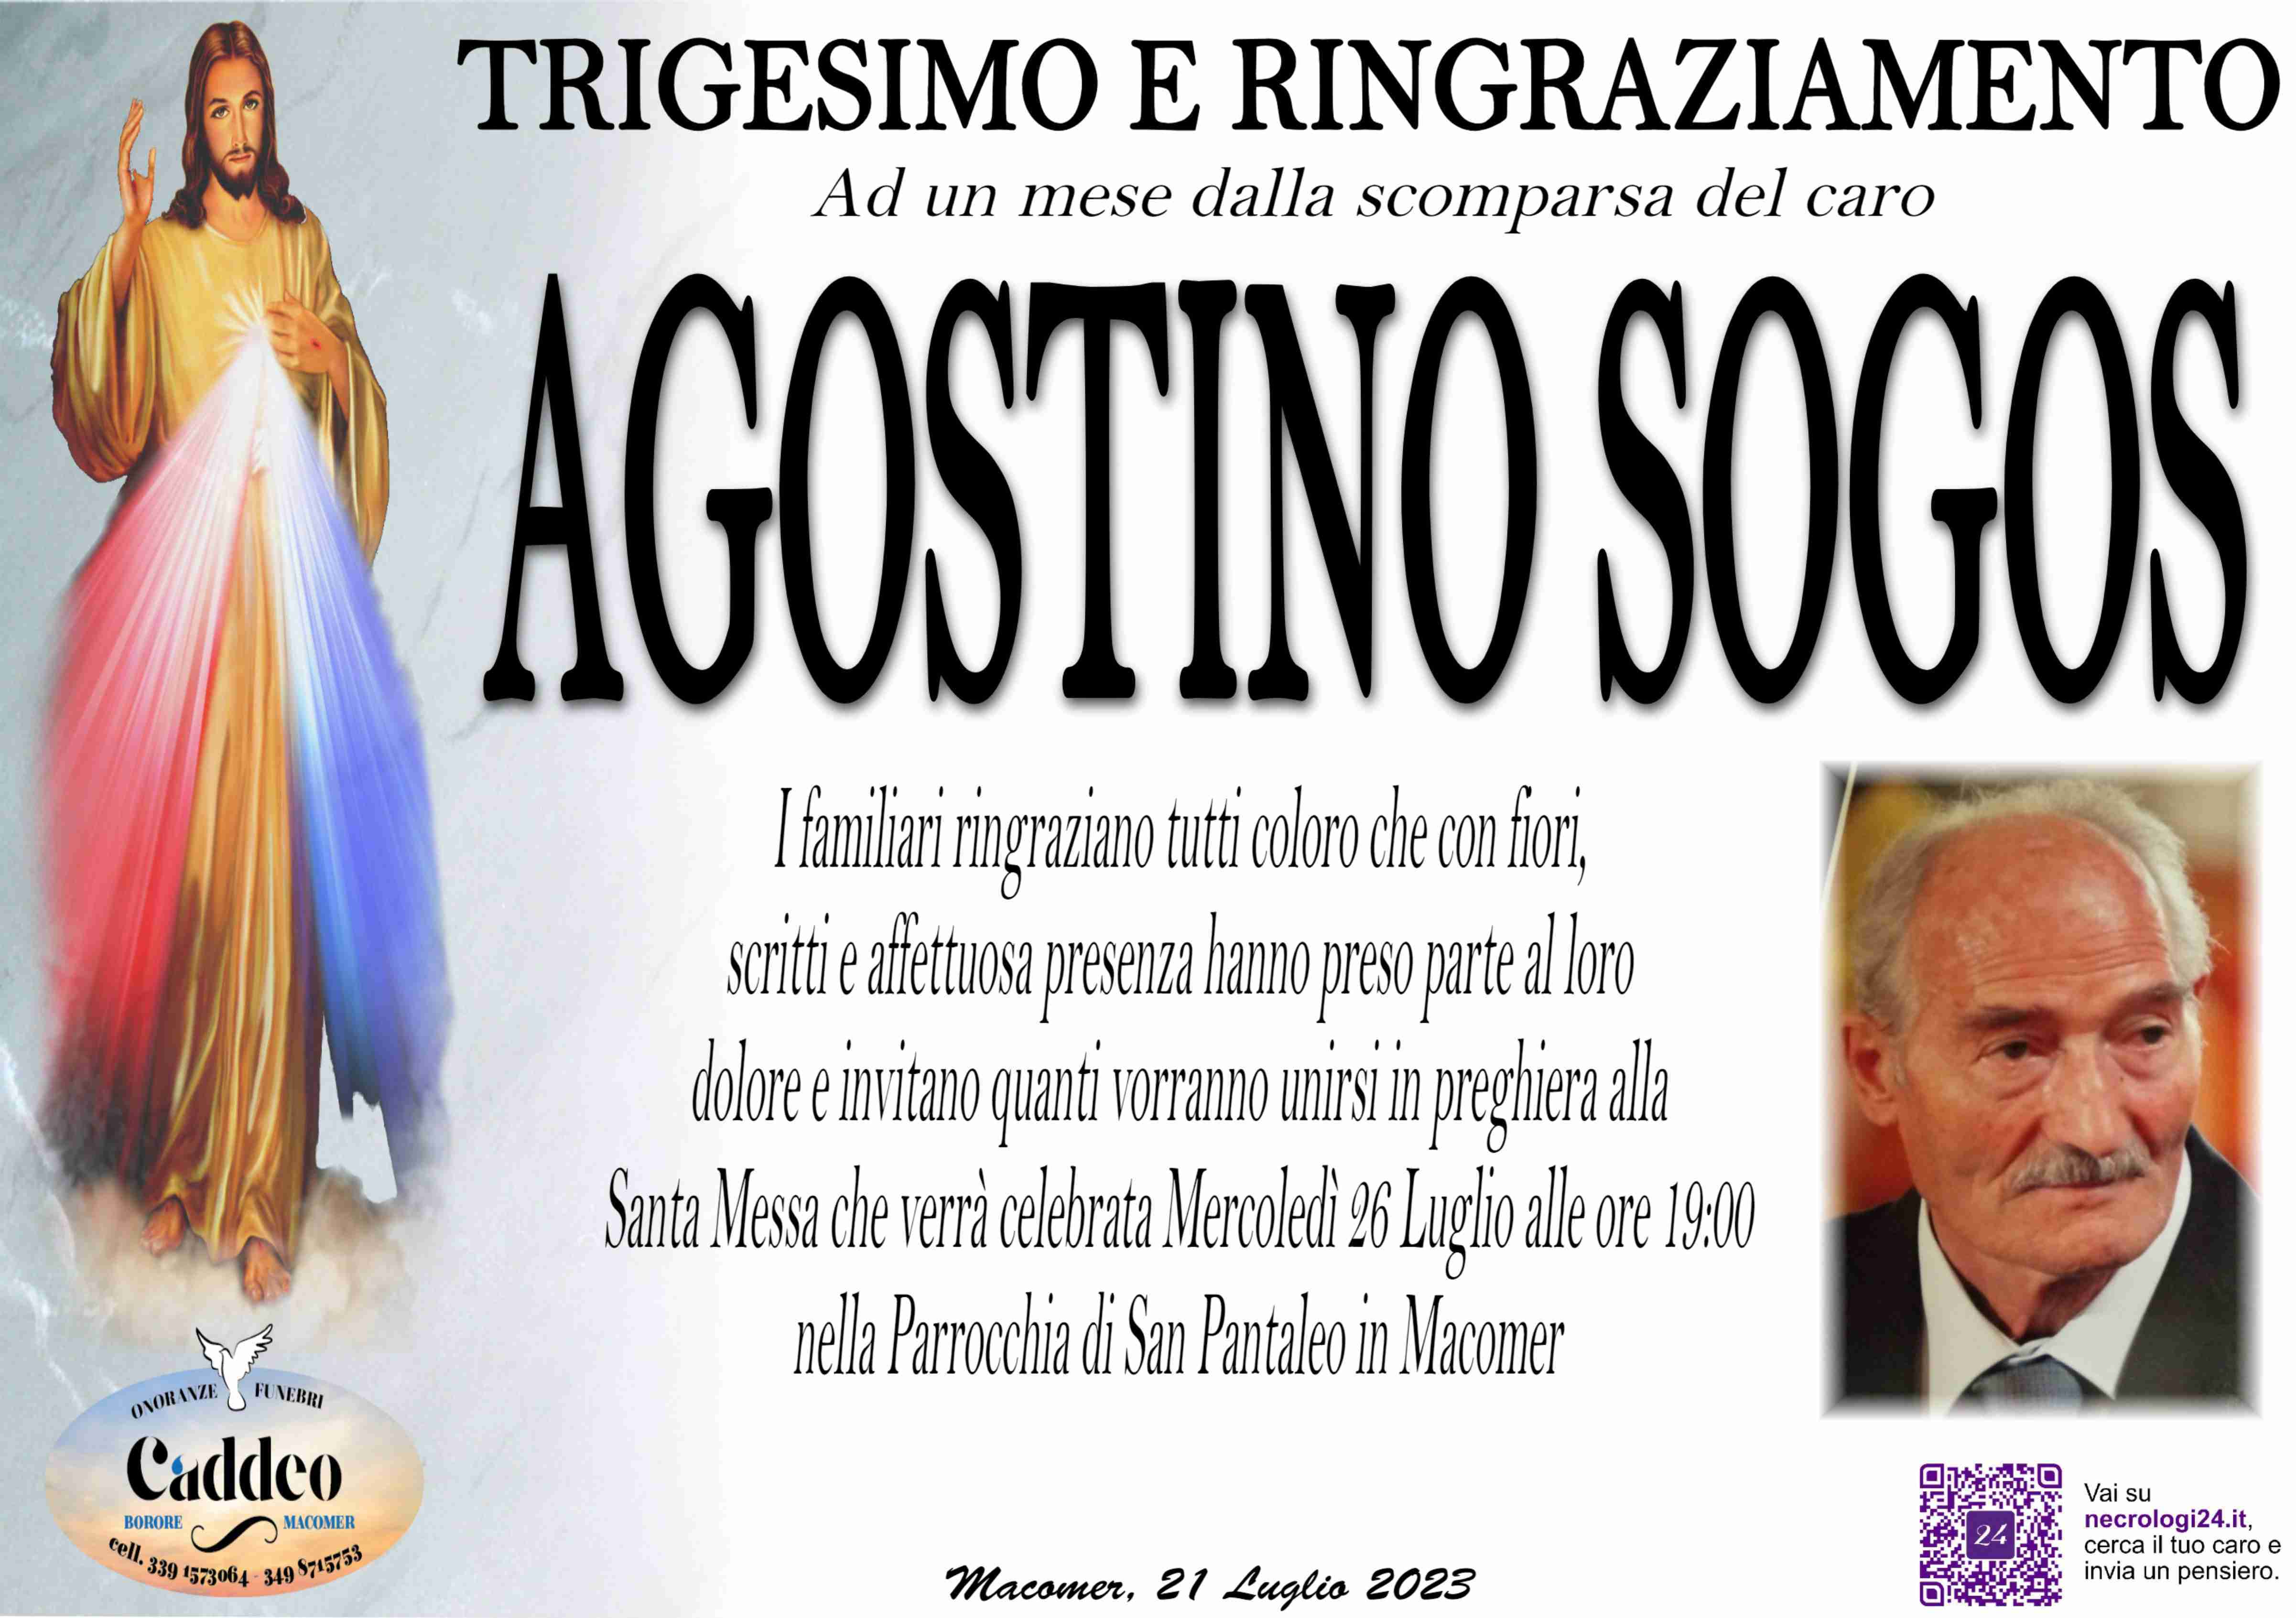 Agostino Sogos